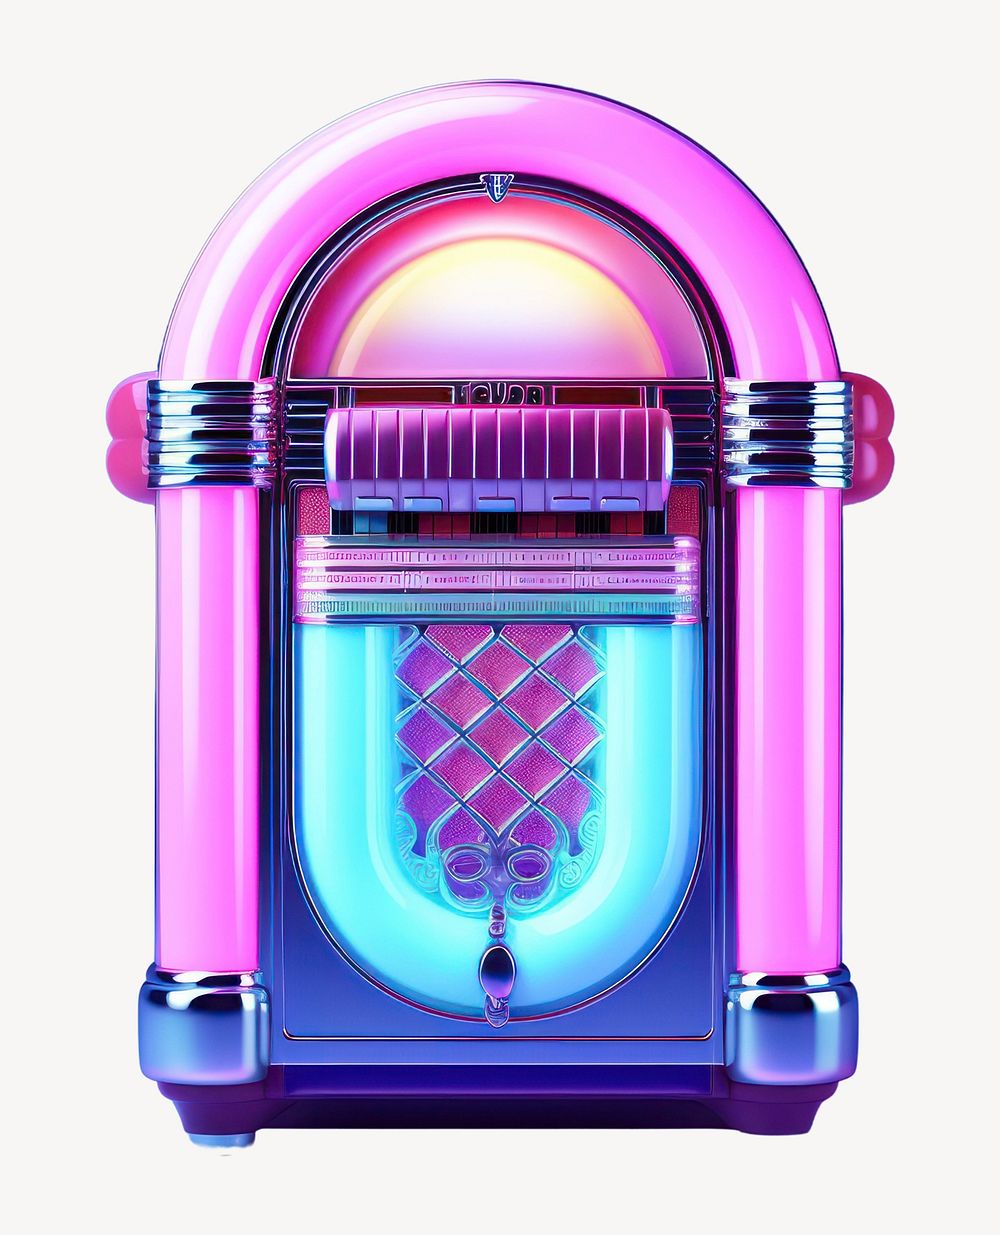 Retro neon jukebox illustration